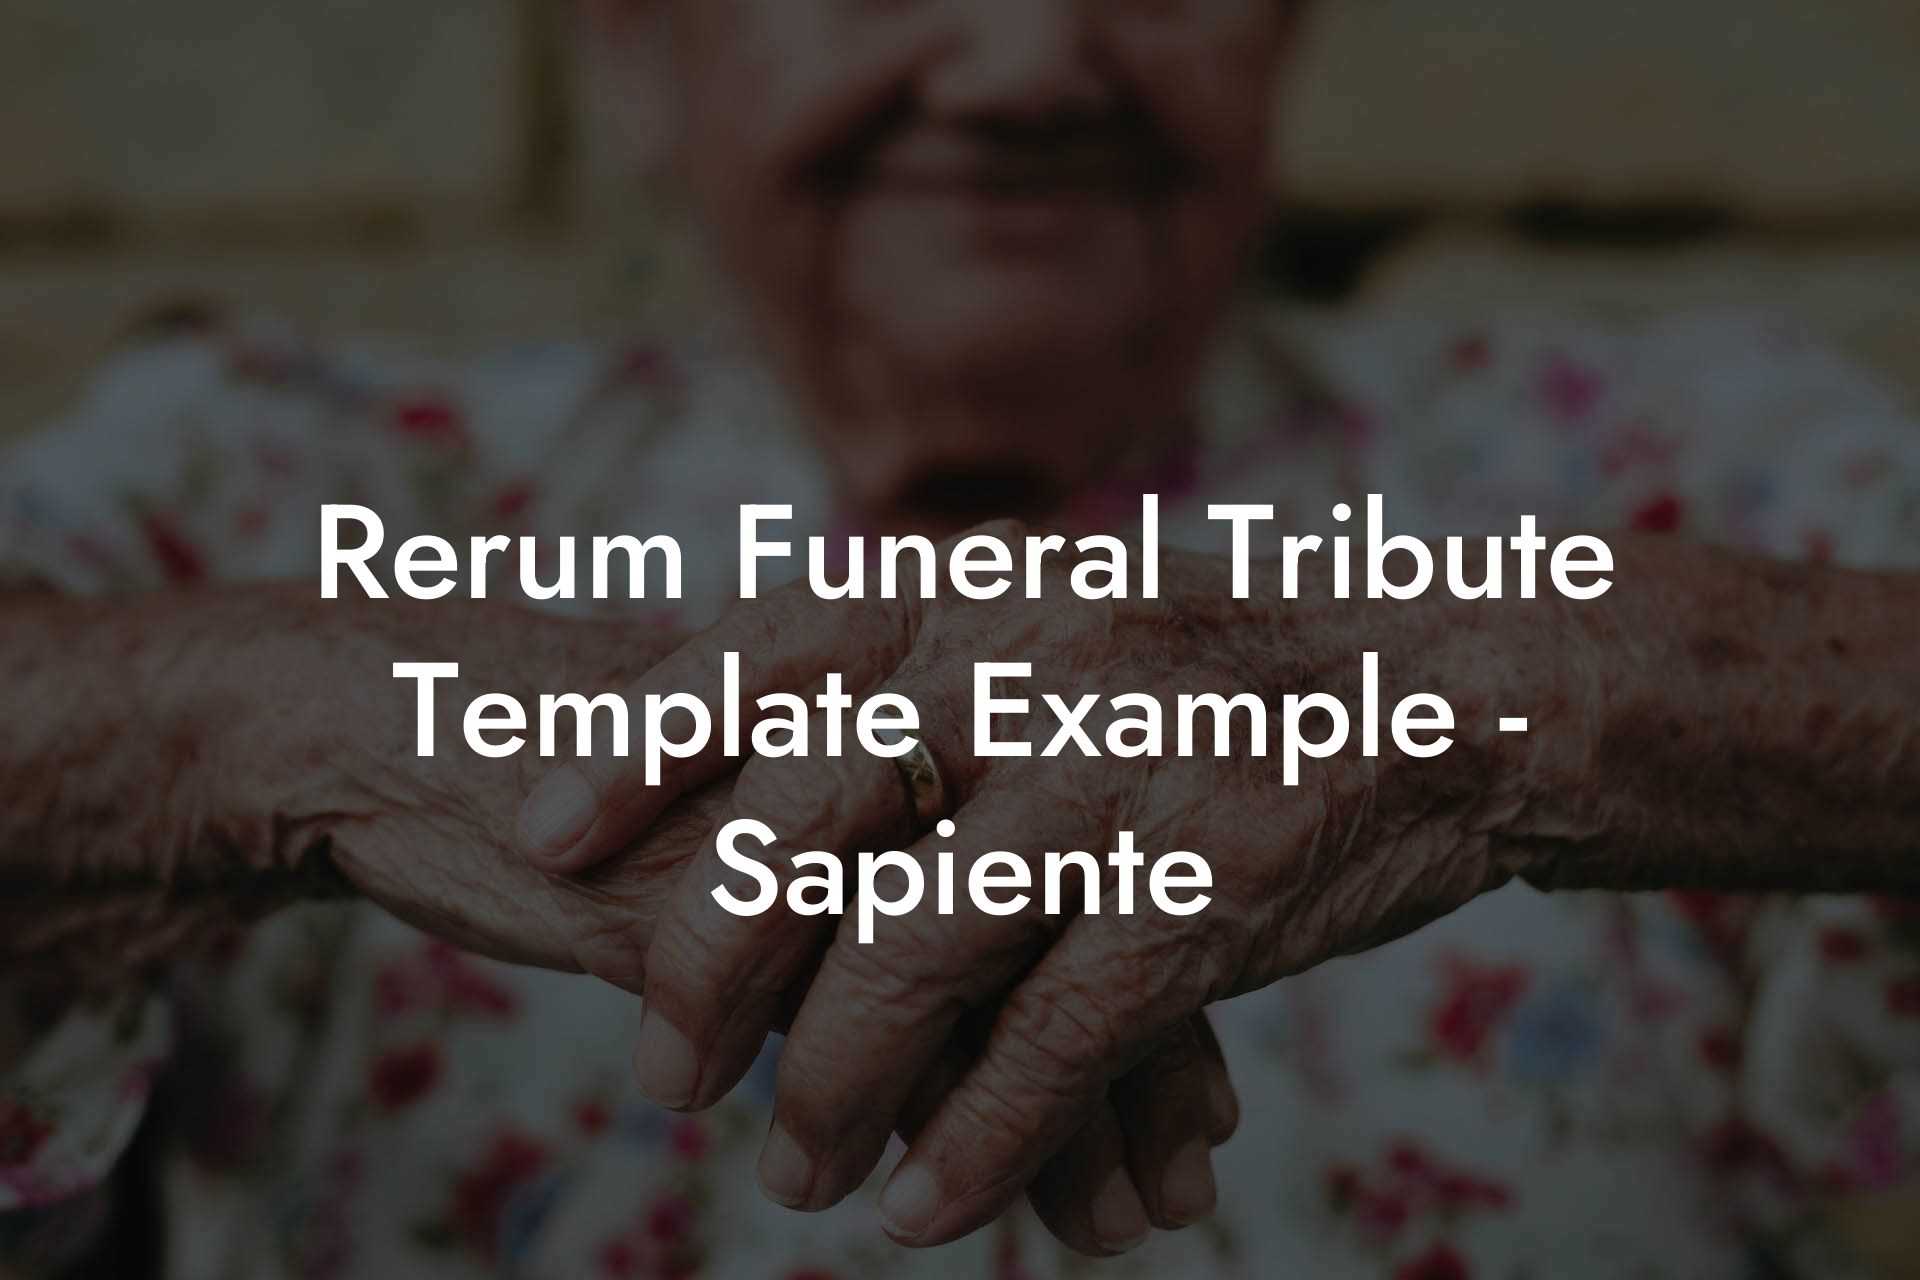 Rerum Funeral Tribute Template Example - Sapiente